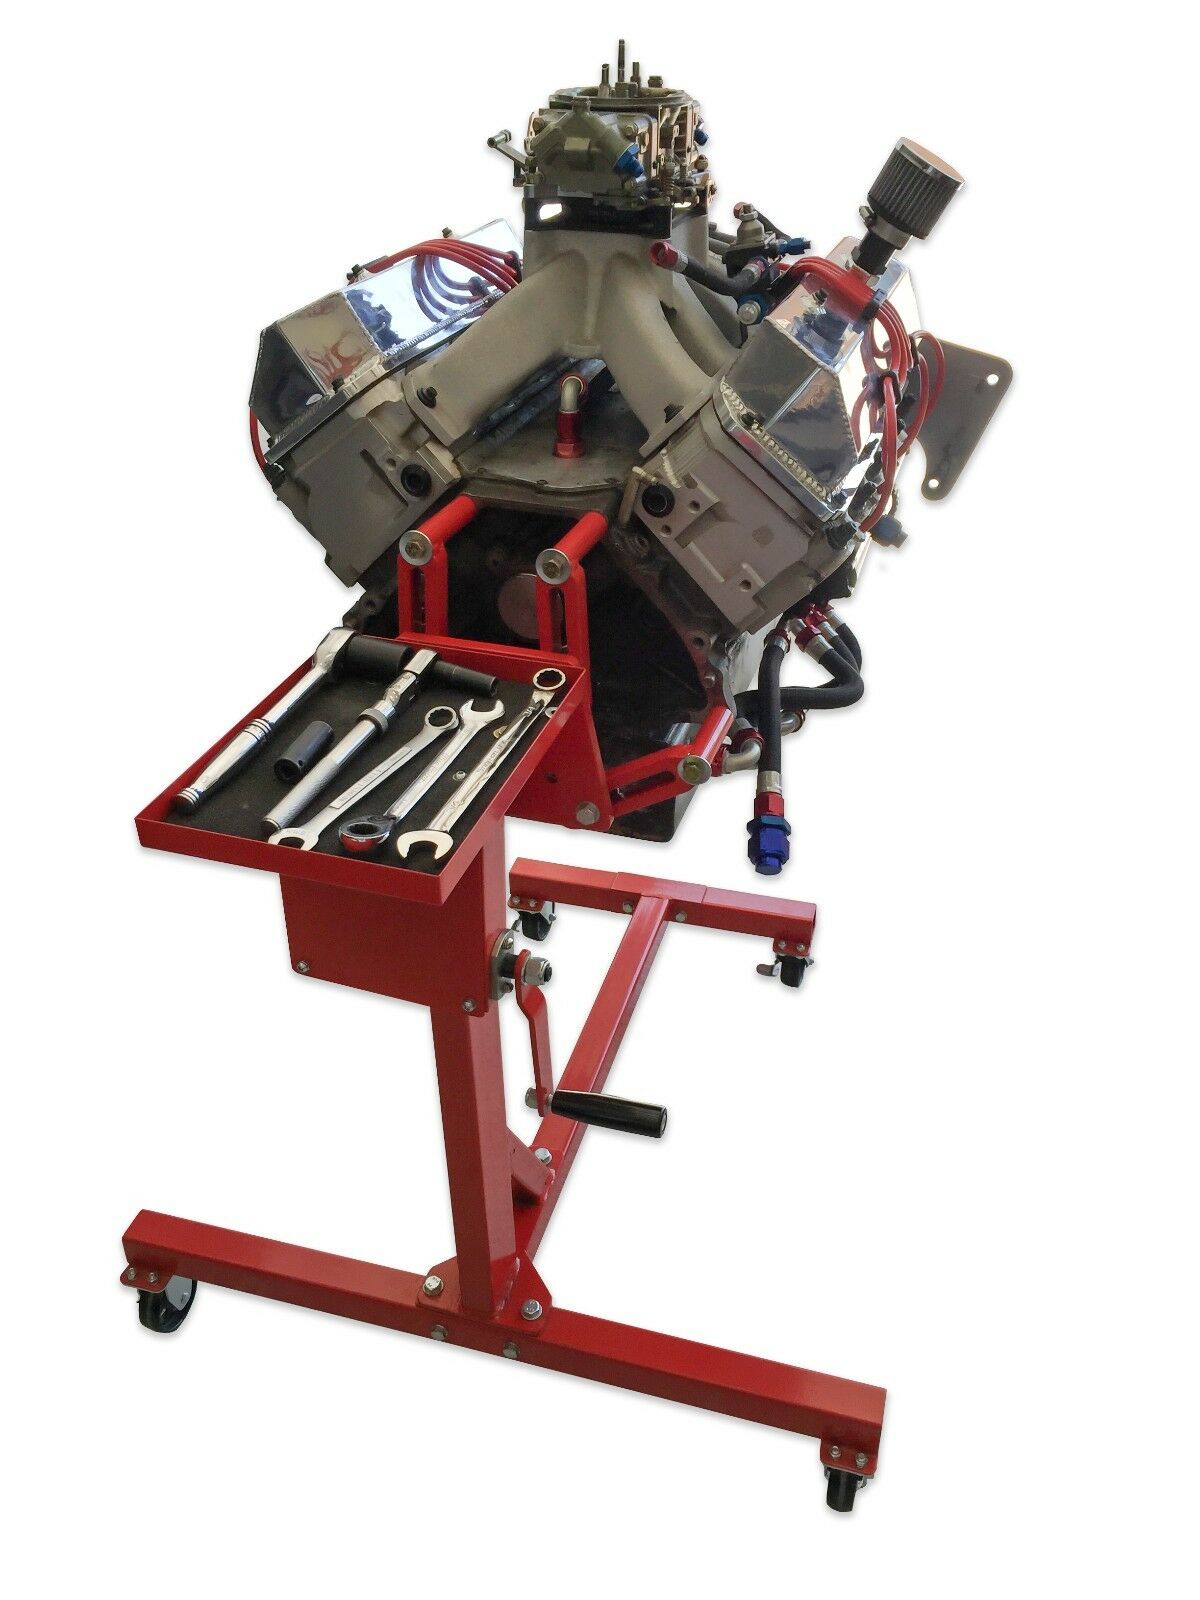 Jackco 1000 lb. Capacity Rotating Engine Stand with Tool Tray